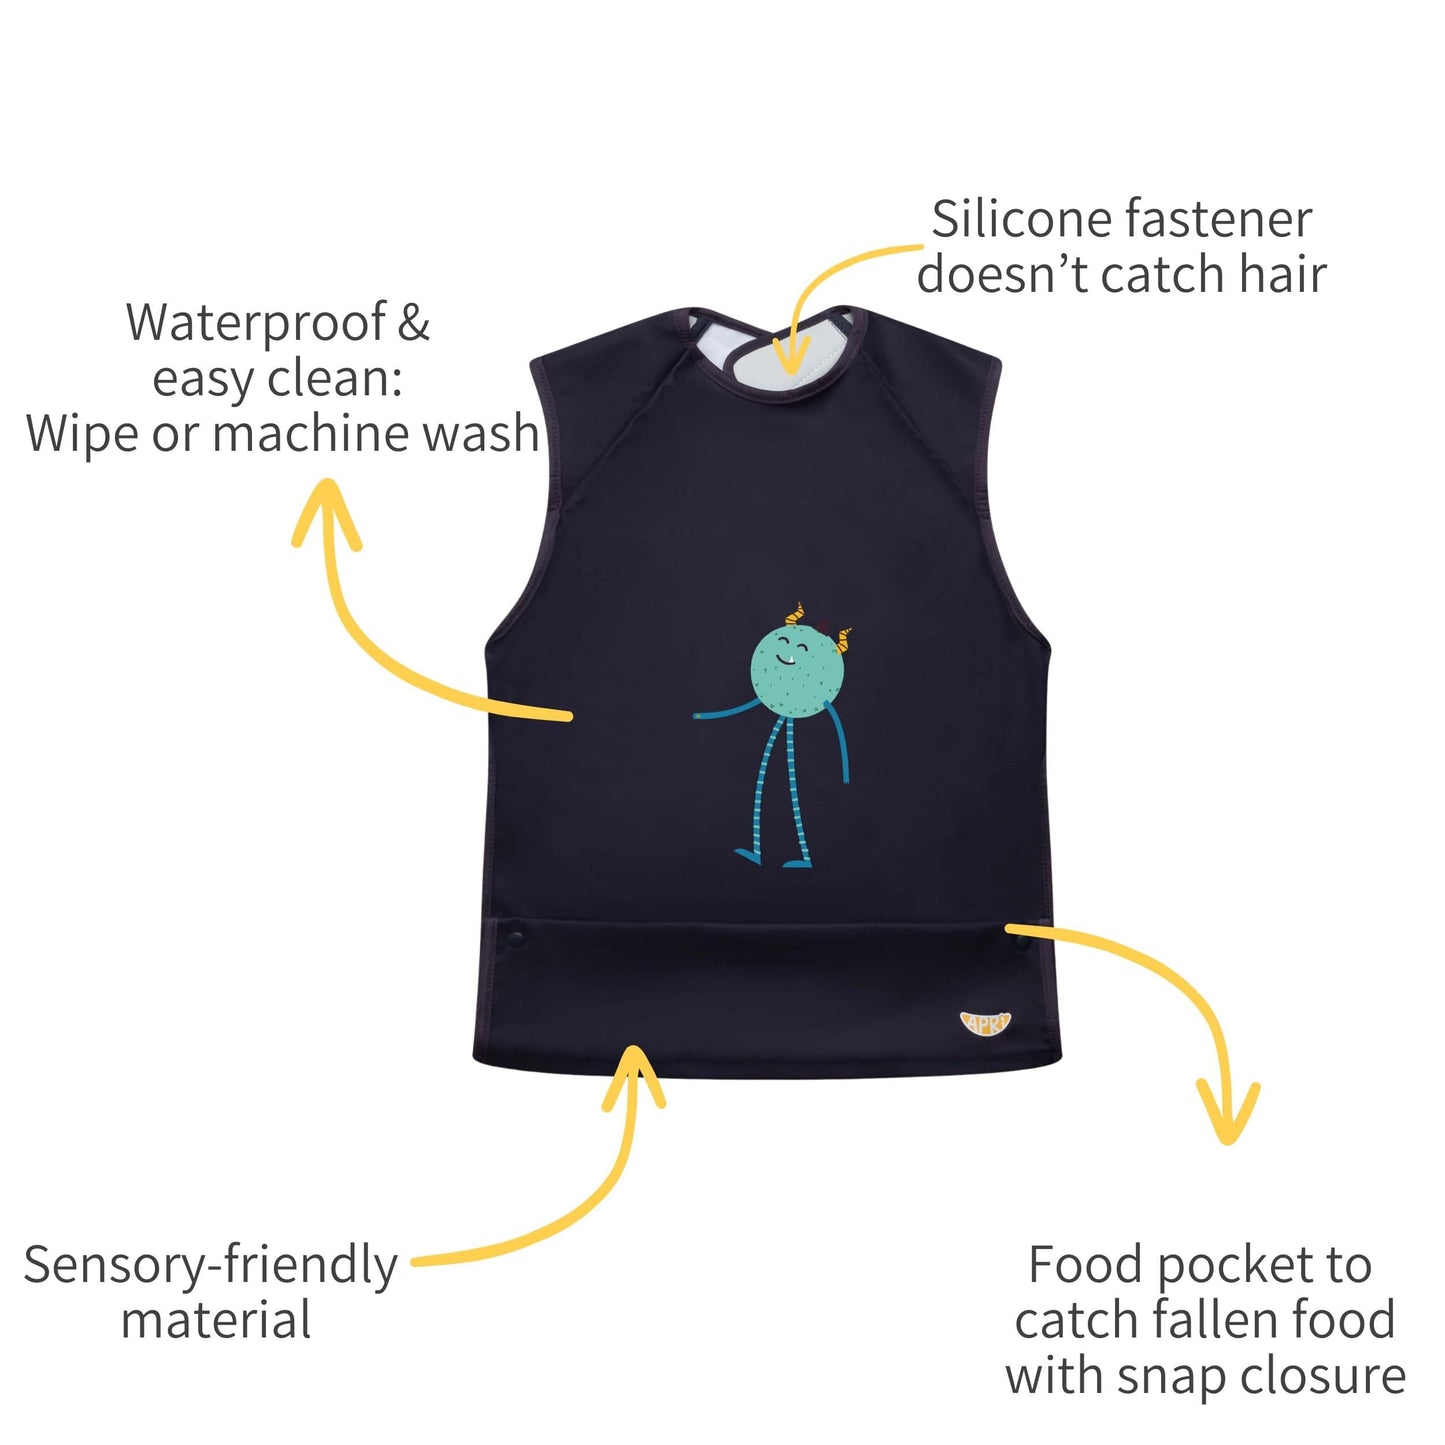 unique apri bib features, waterproof, food pocket , sensory friendly material